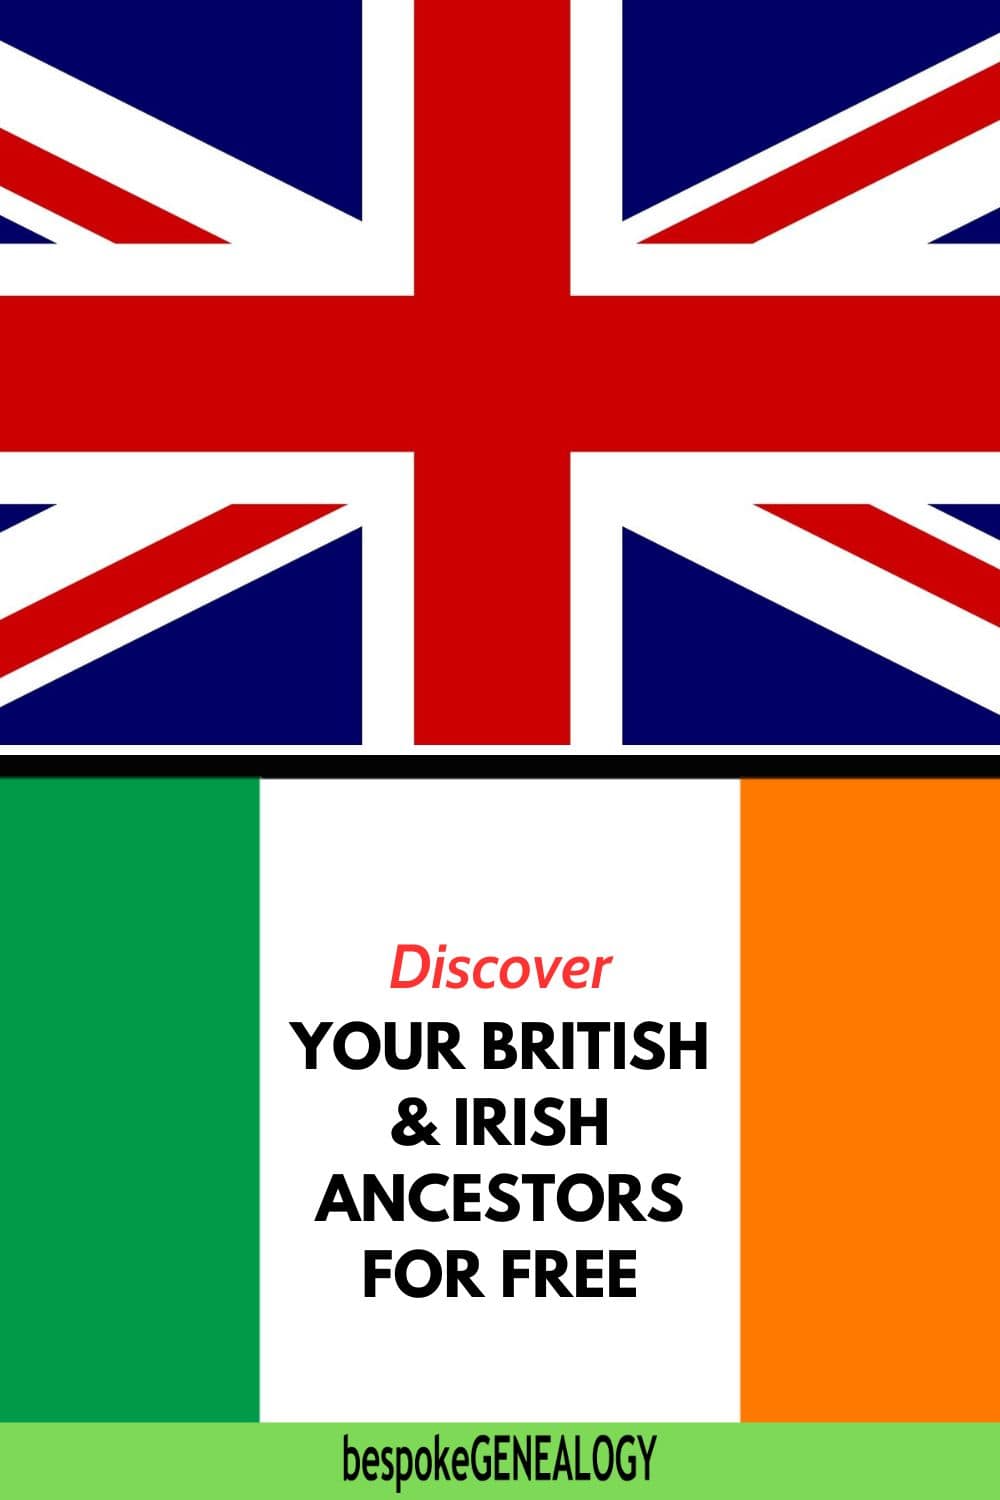 Discover your British and Irish ancestors for free. Image of the British and Irish flags.